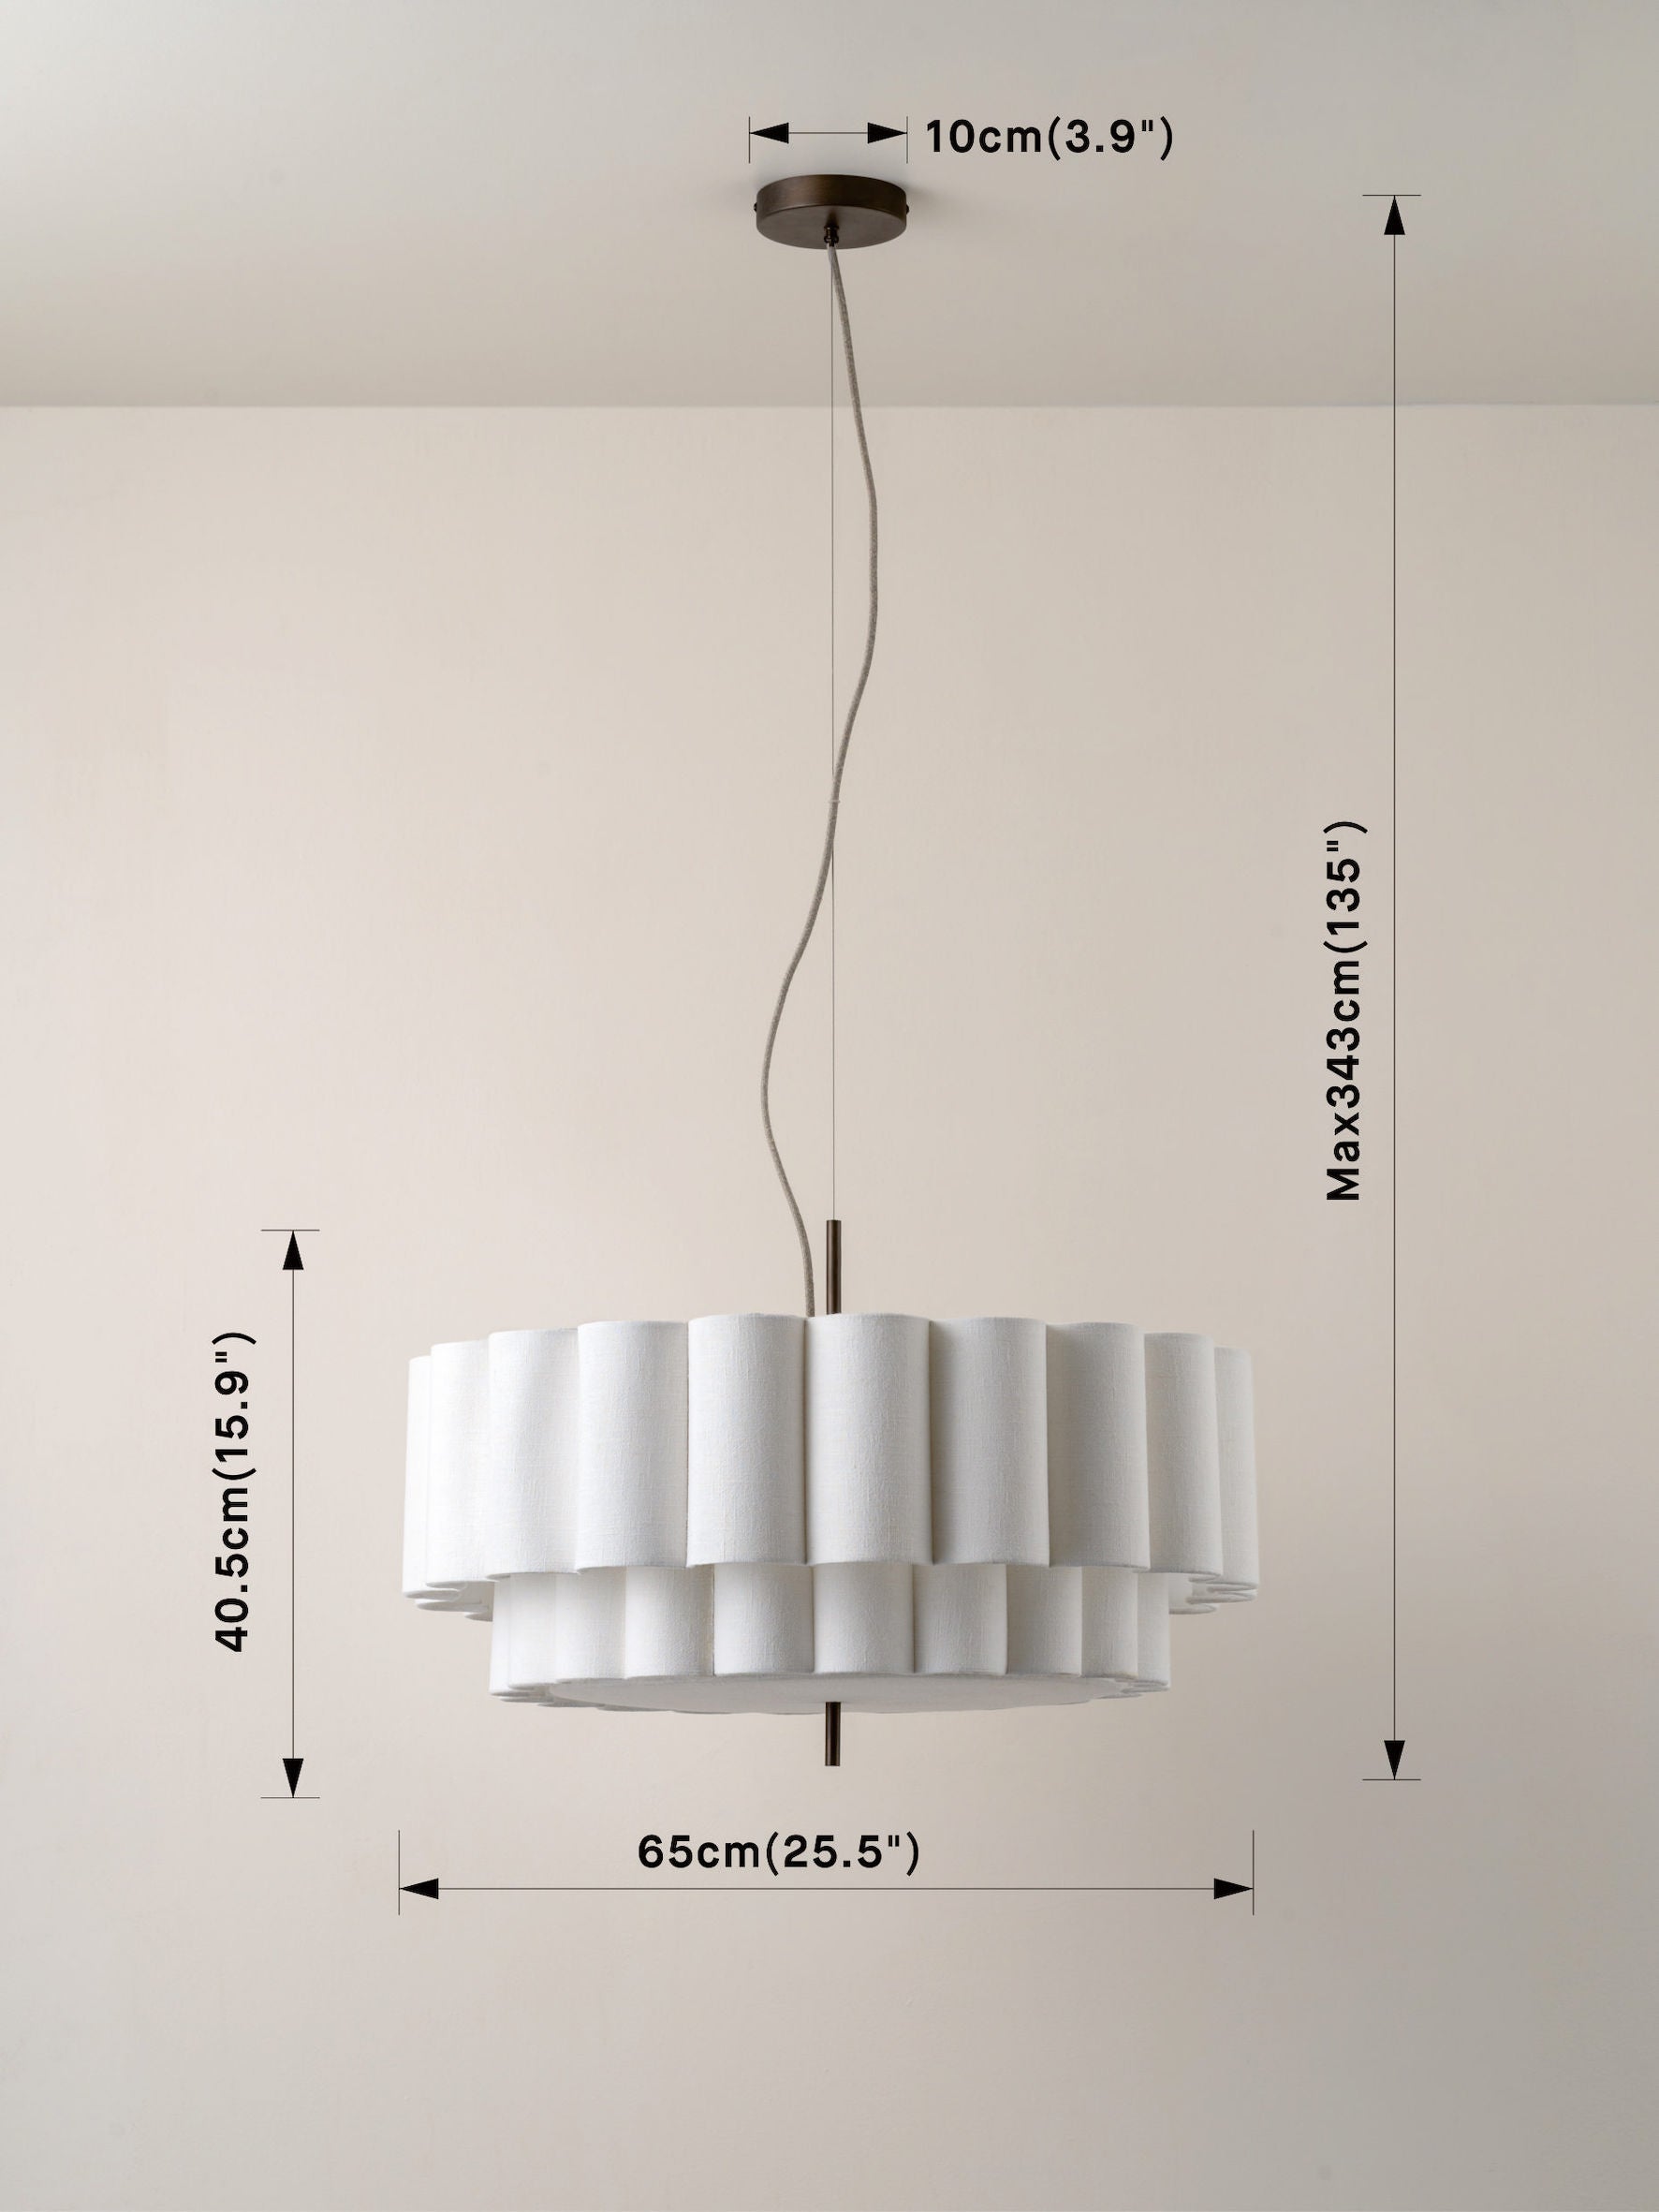 Folia - large scalloped natural linen pendant | Ceiling Light | Lights & Lamps | UK | Modern Affordable Designer Lighting